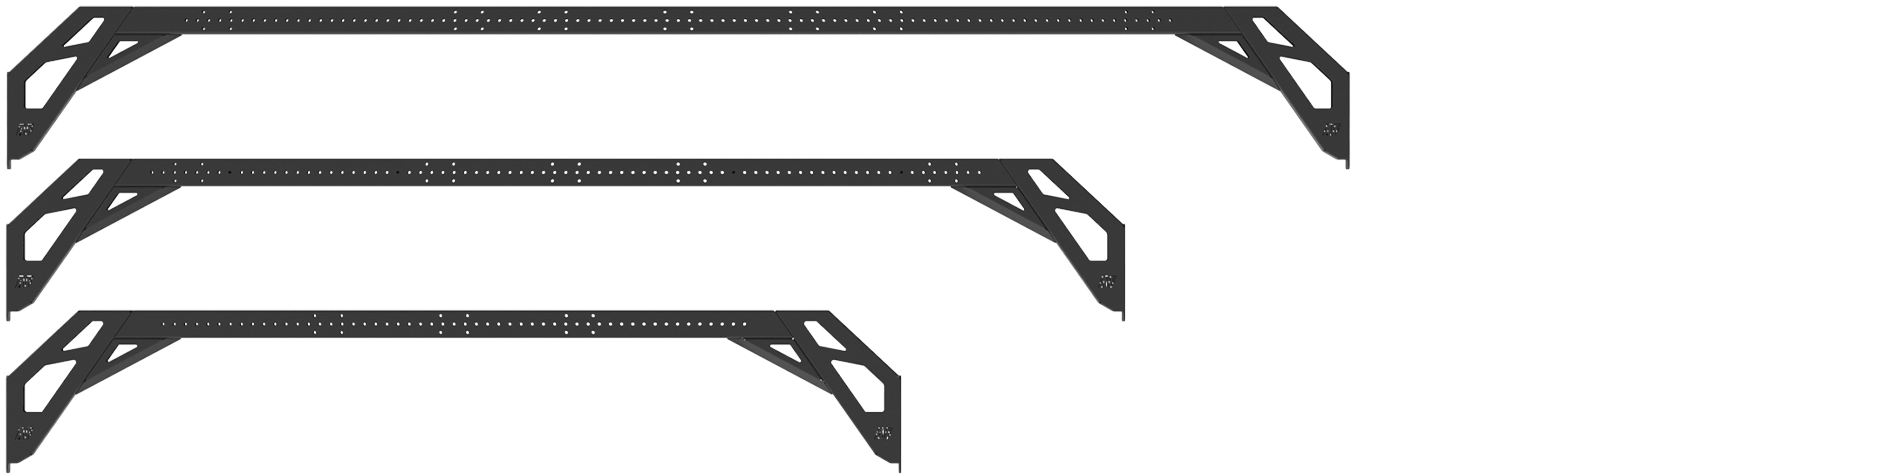 AlphaFit Form Rig bridge lengths